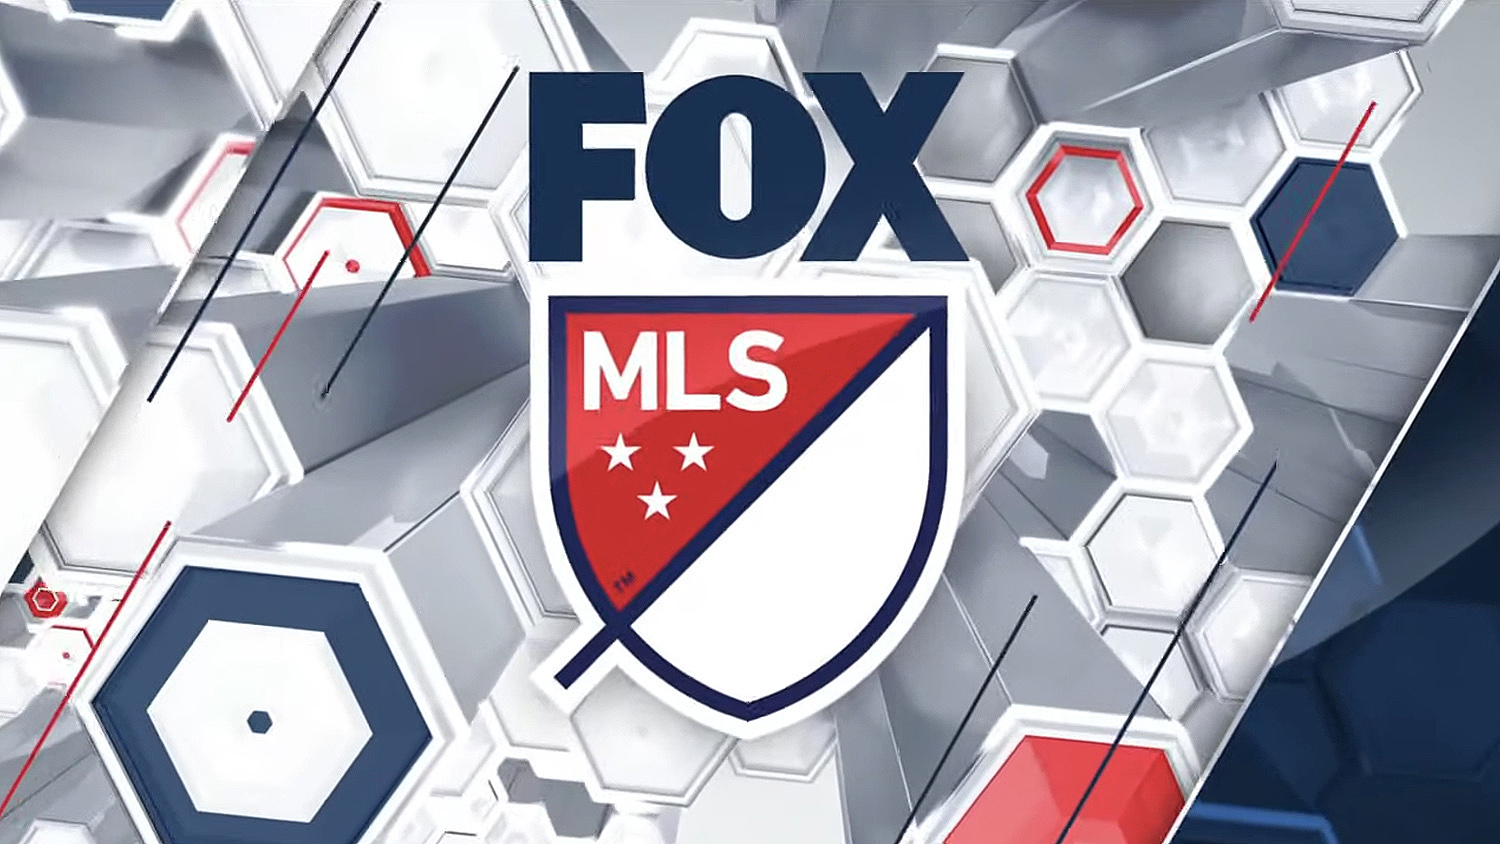 NCS_MLS-FOX_12